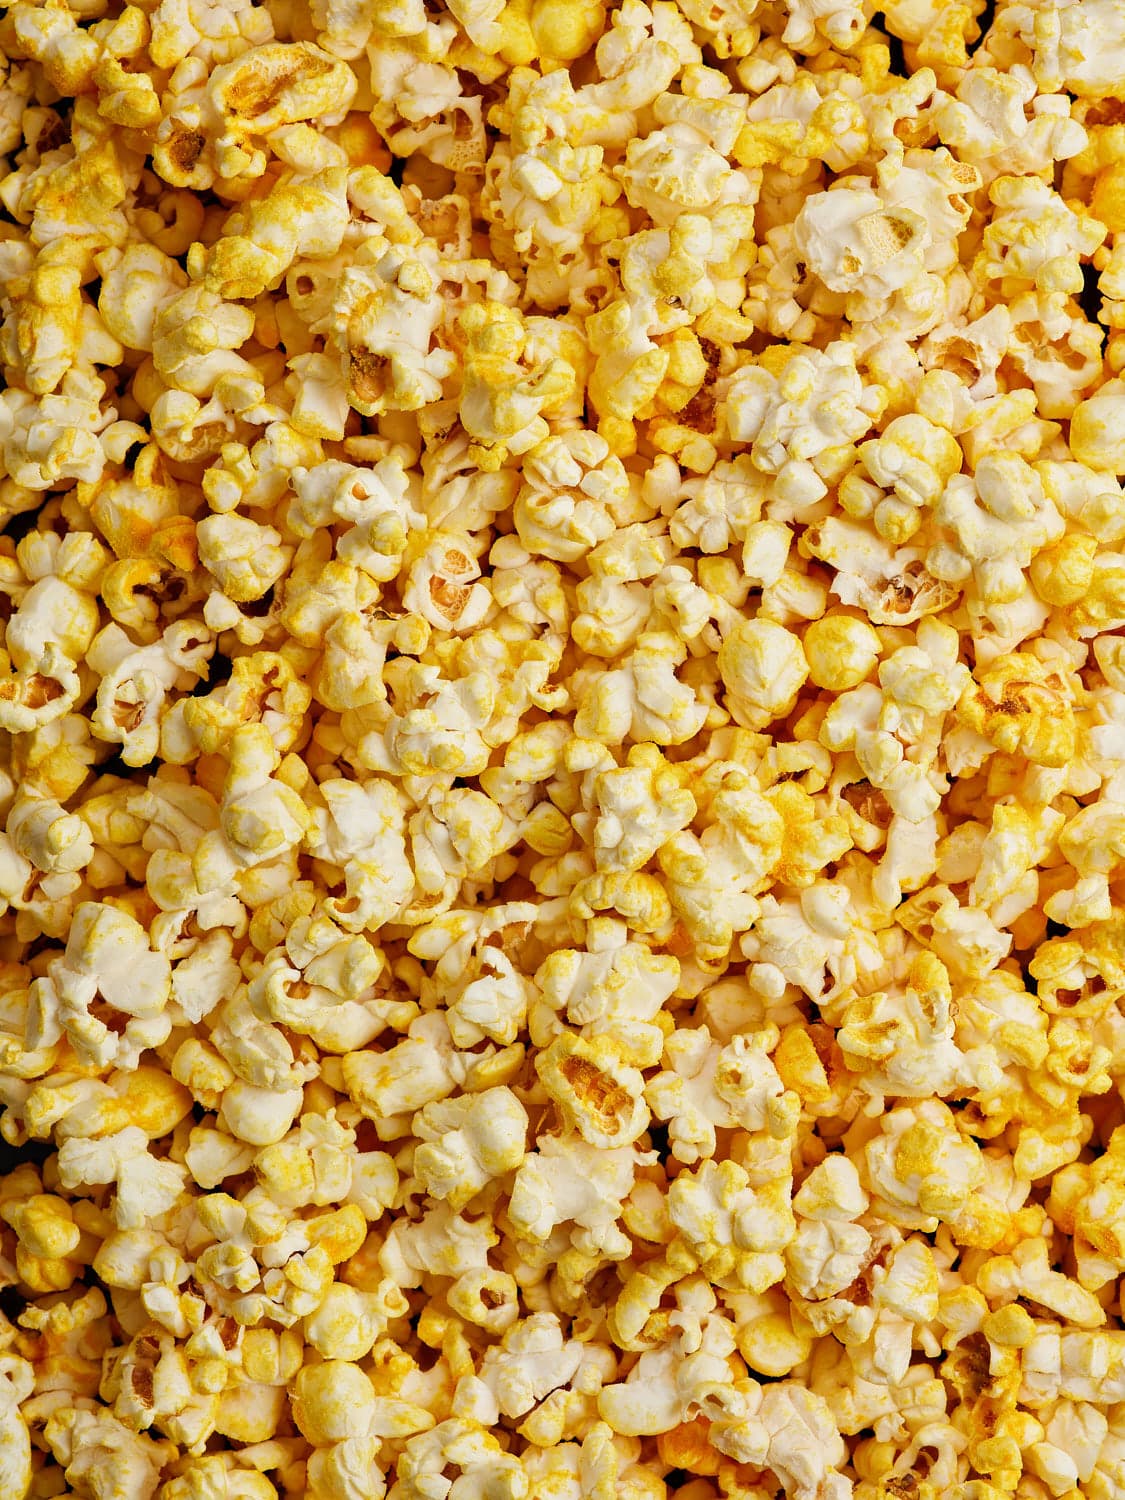 Gourmet Popcorn Packaging and Closeups